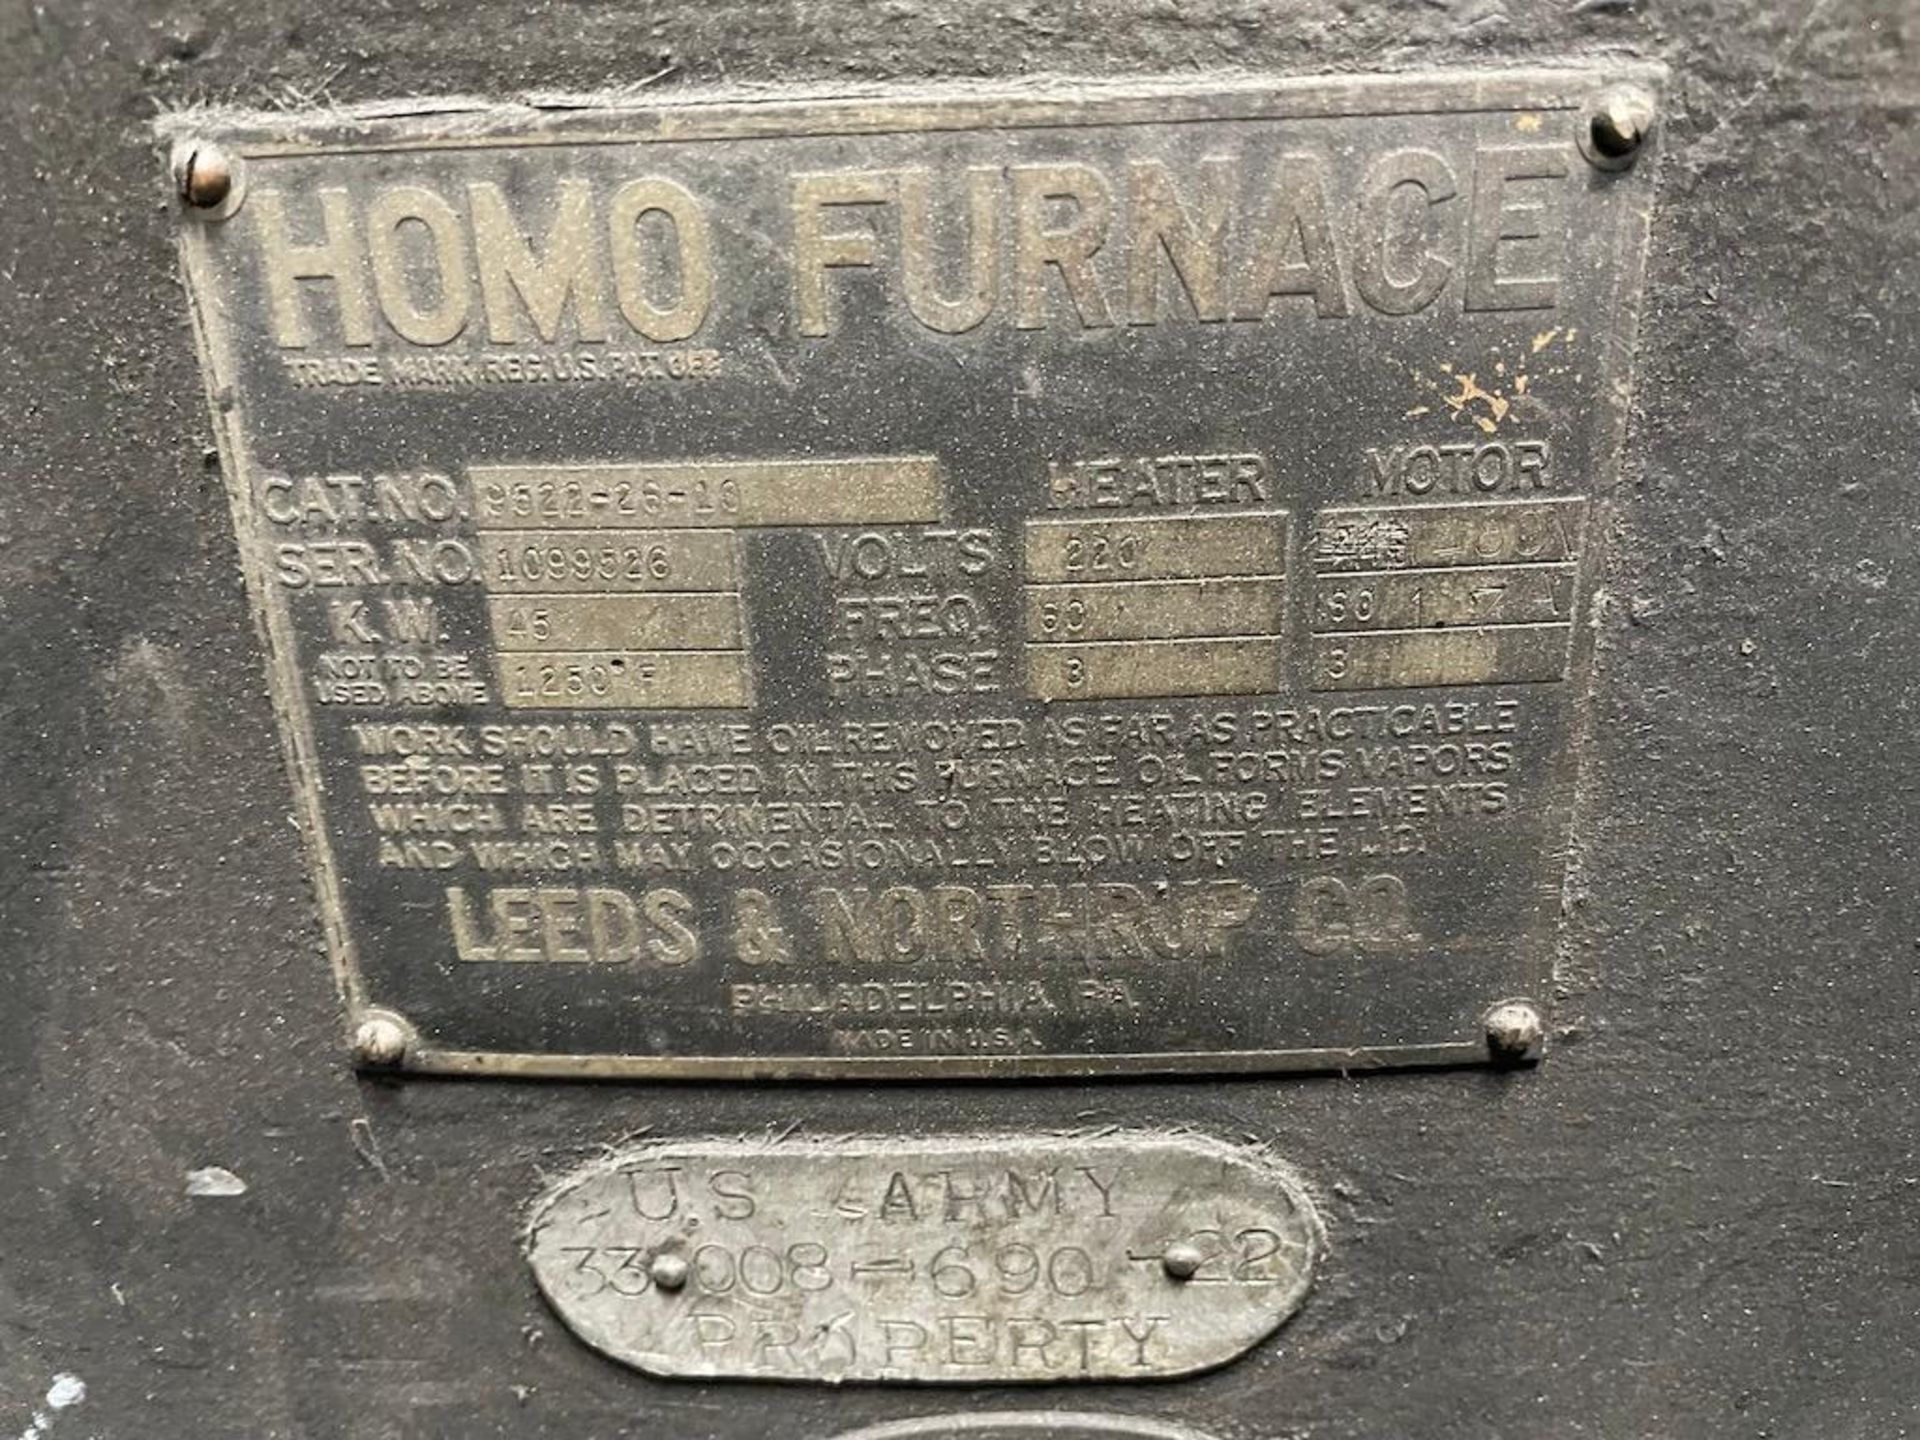 Leeds & Northrup Homo Furnace, Basket Capacity Approx. 24" Dia X 35" Deep, Catalogue No 9522-26-10, - Image 10 of 11